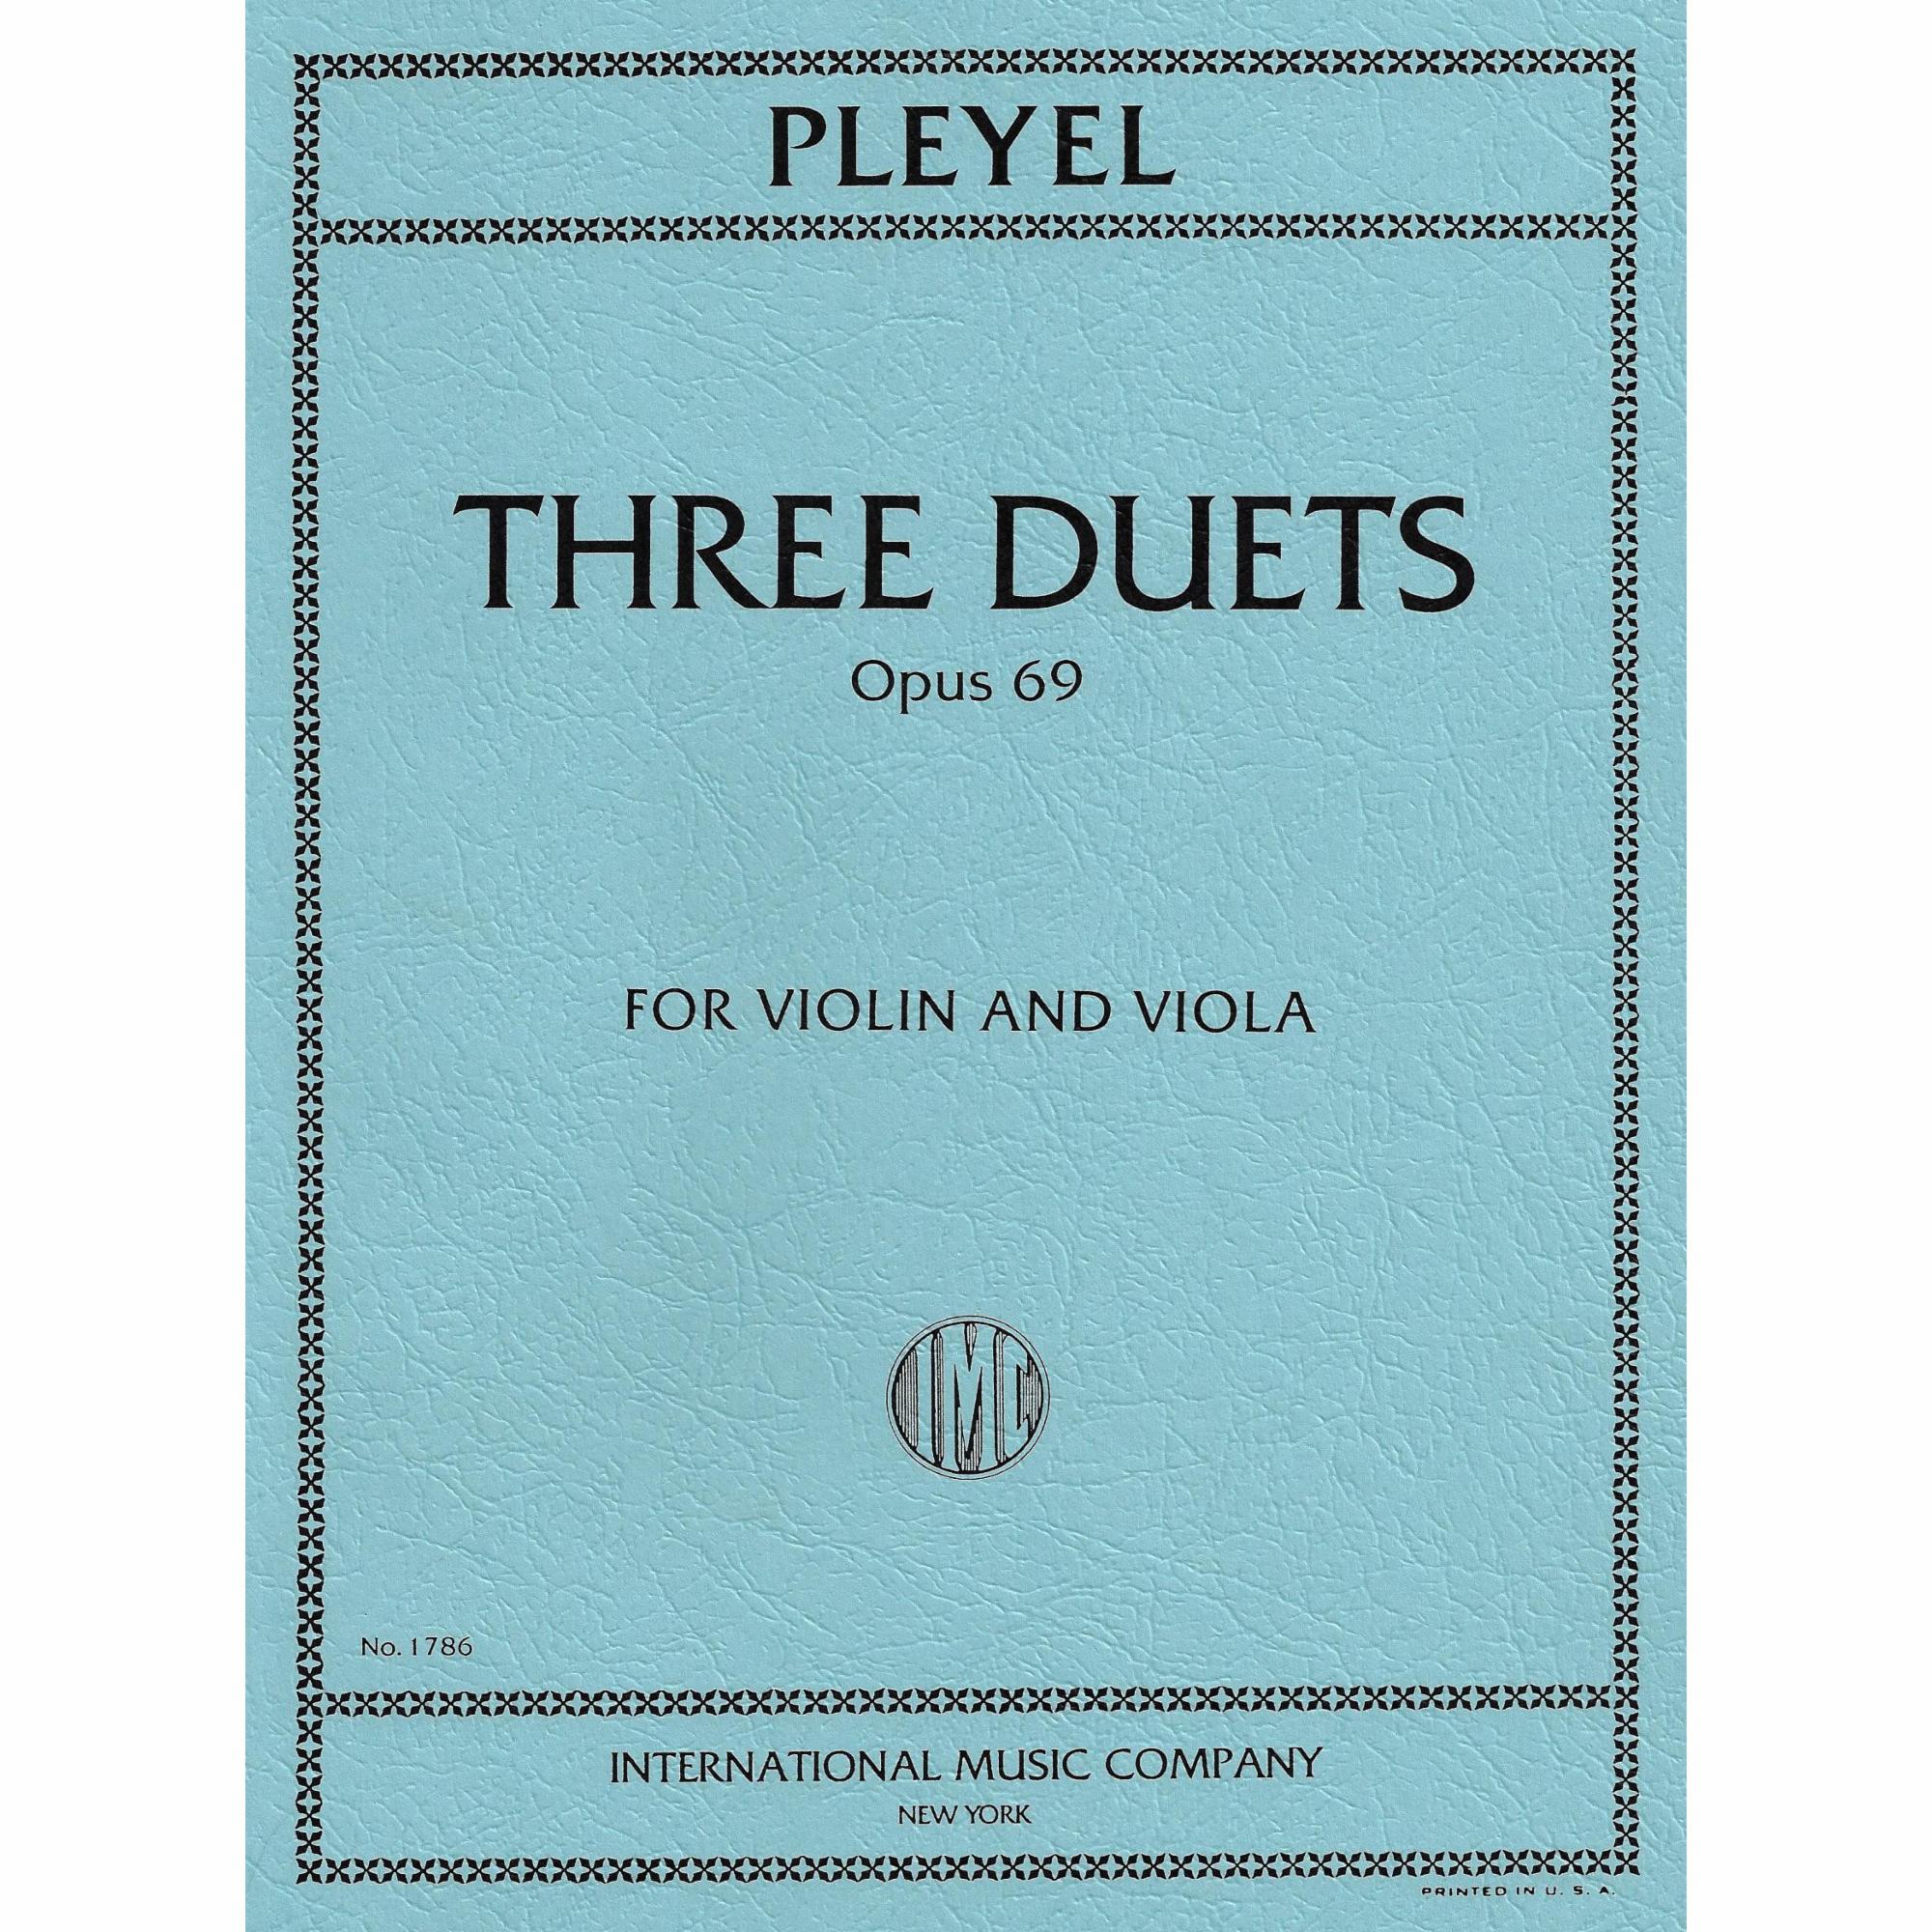 Pleyel -- Three Duets, Op. 69 for Violin and Viola